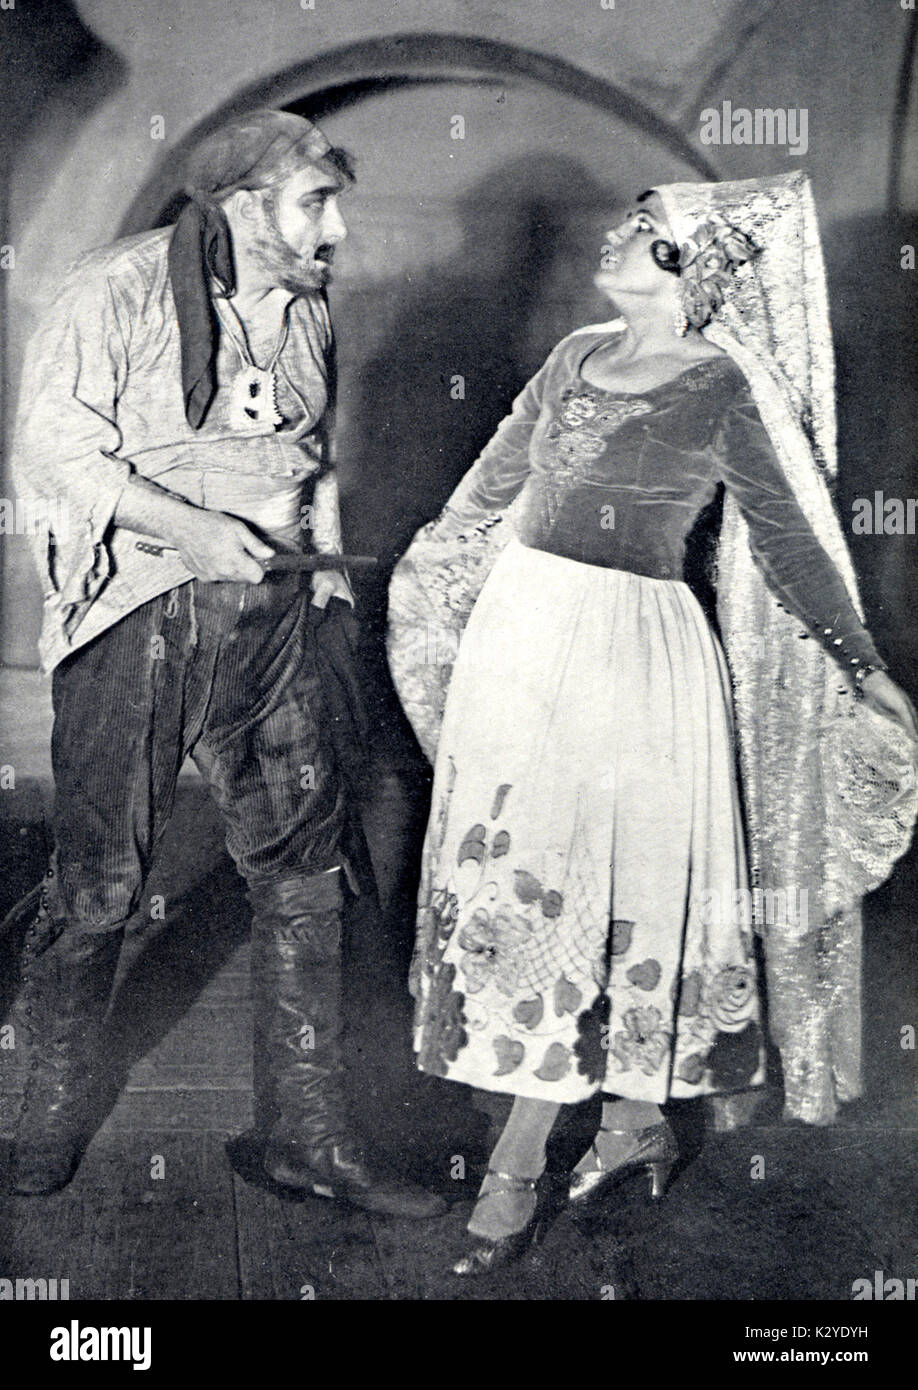 Bizet's opera Carmen, Don José stabs Carmen. Amsterdam production, November 1928.   French composer, 1838-1875 Stock Photo